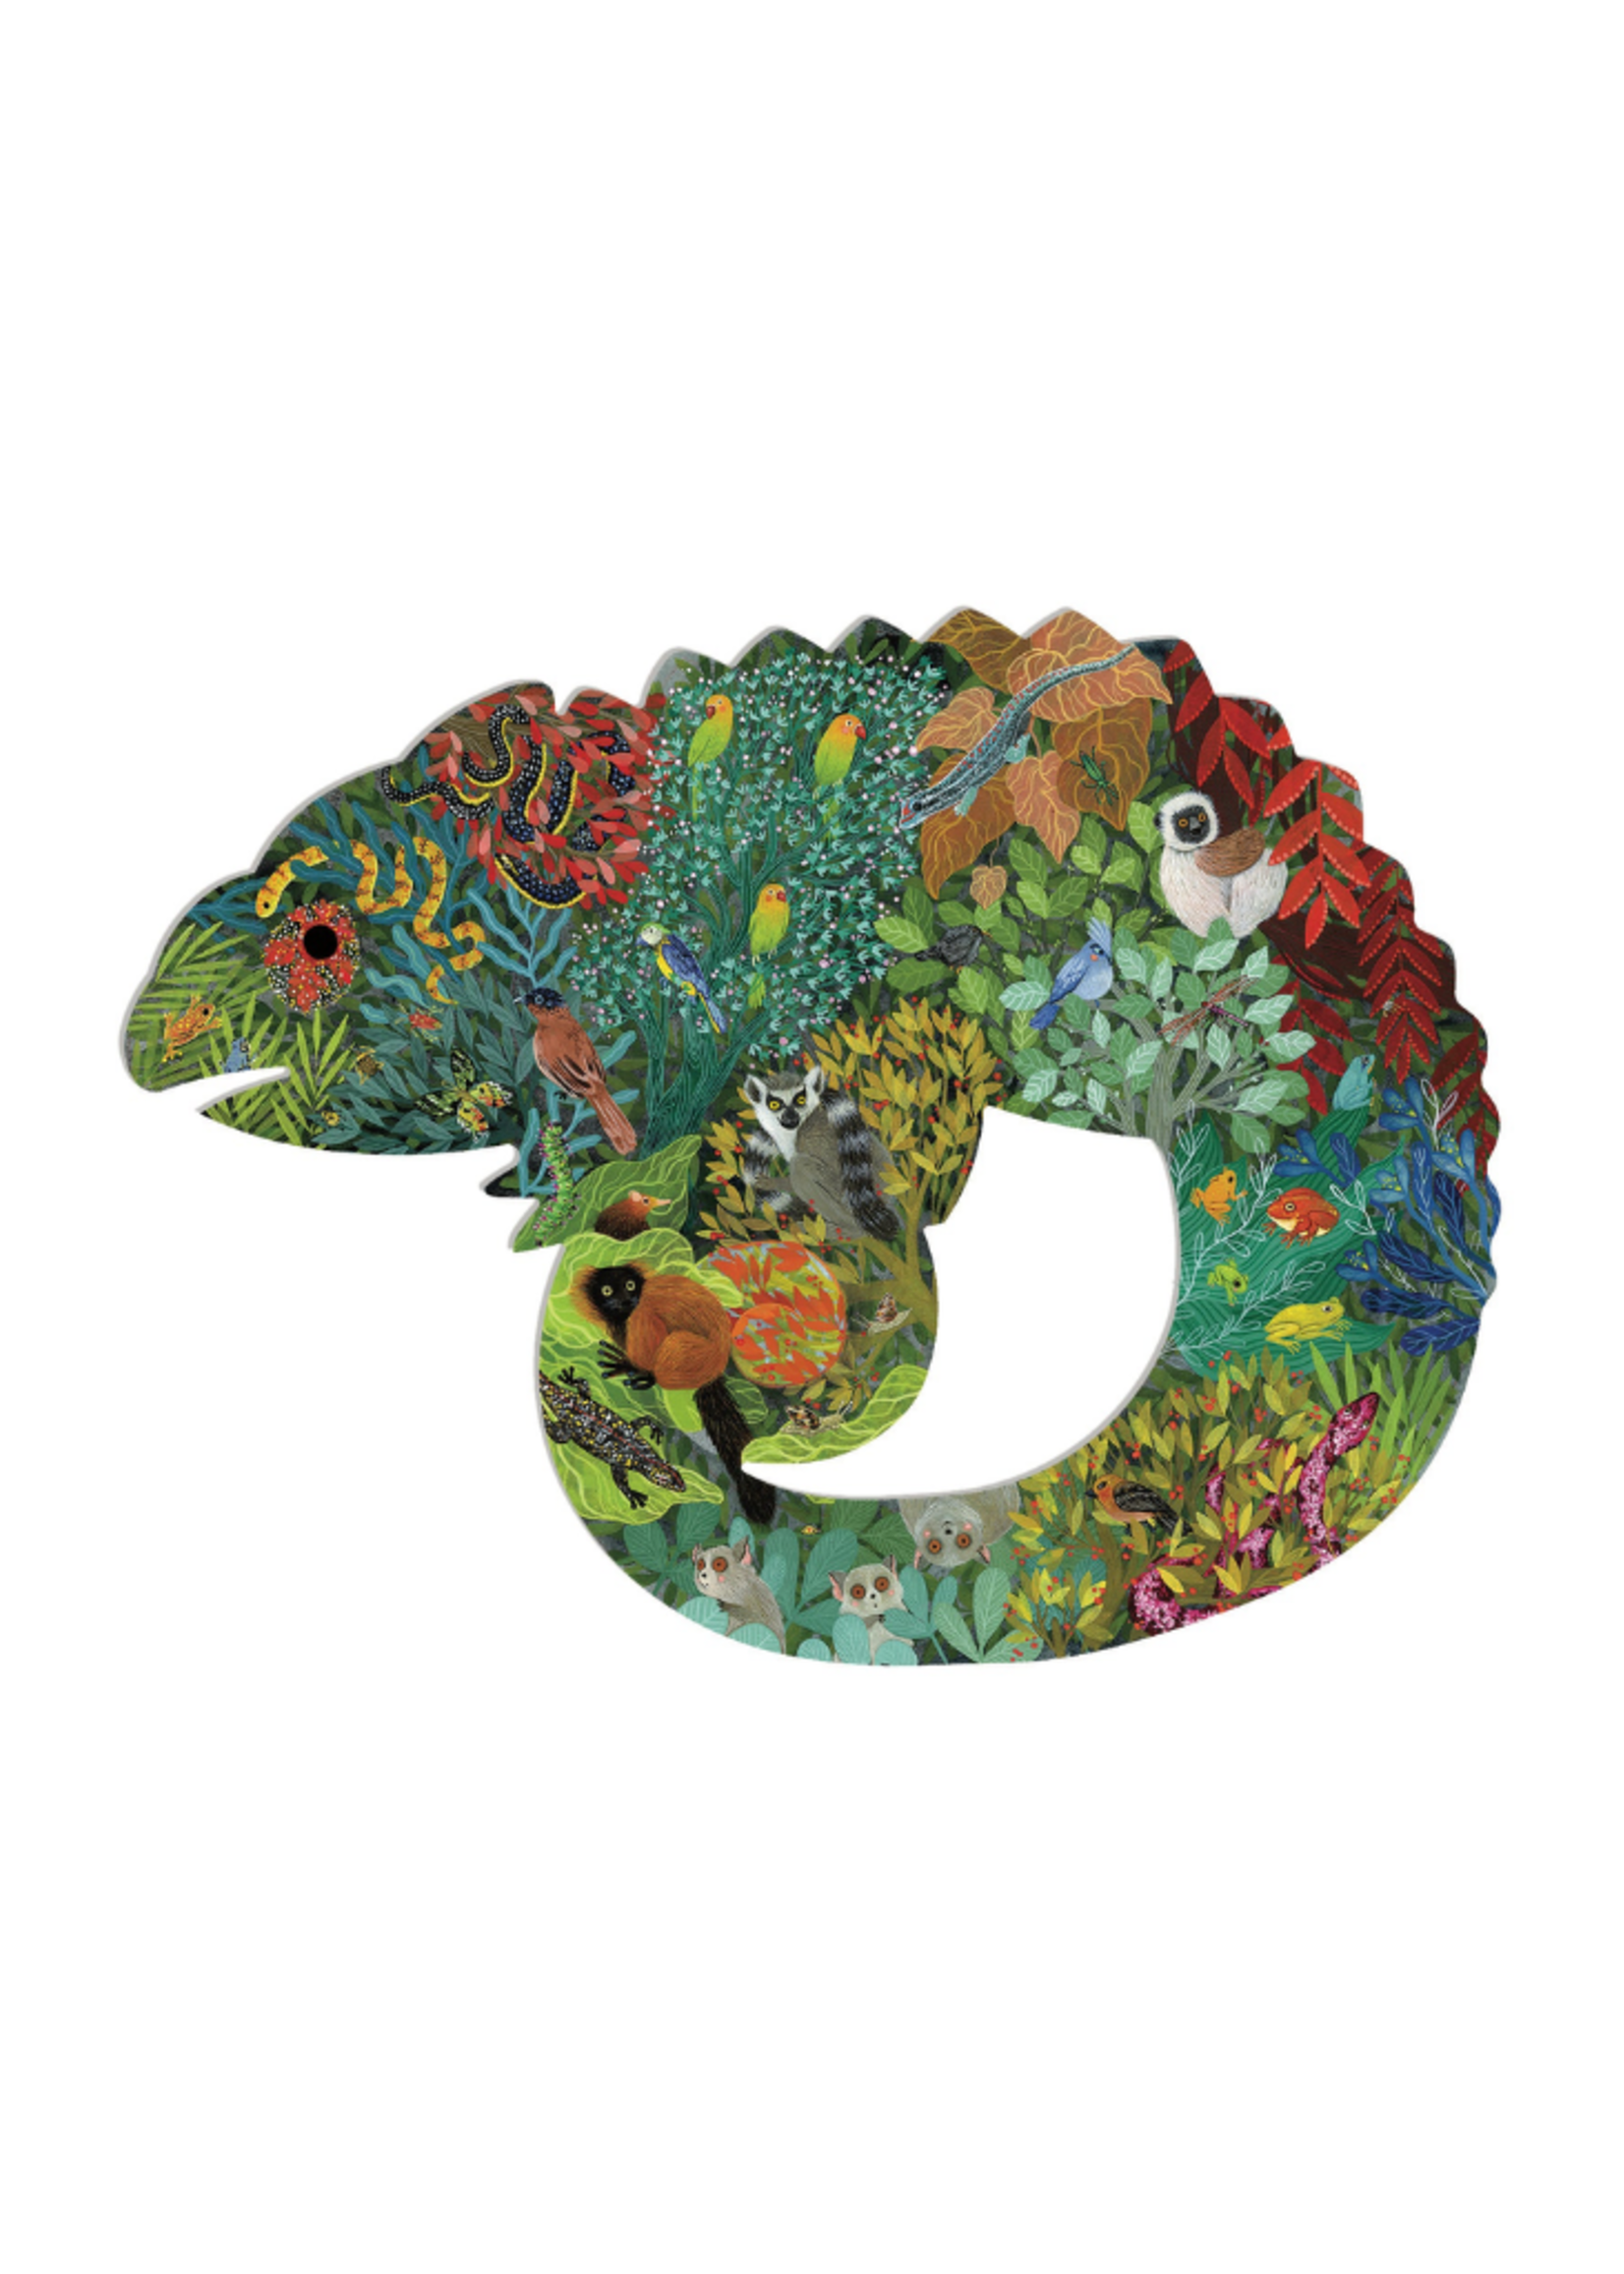 Djeco Puzz'Art Chameleon Puzzle - 150 Pieces - Sugarcup Trading